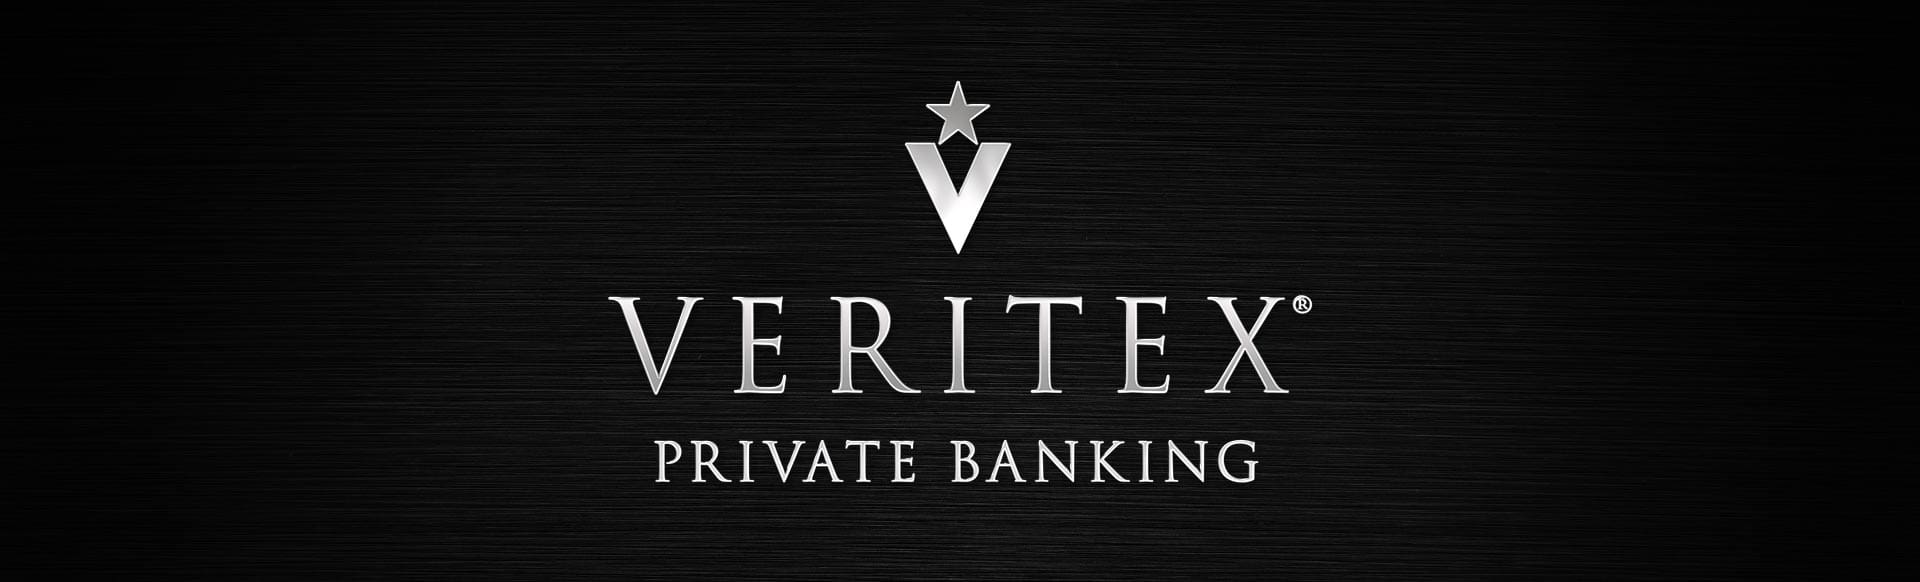 Veritex-Private-Banking